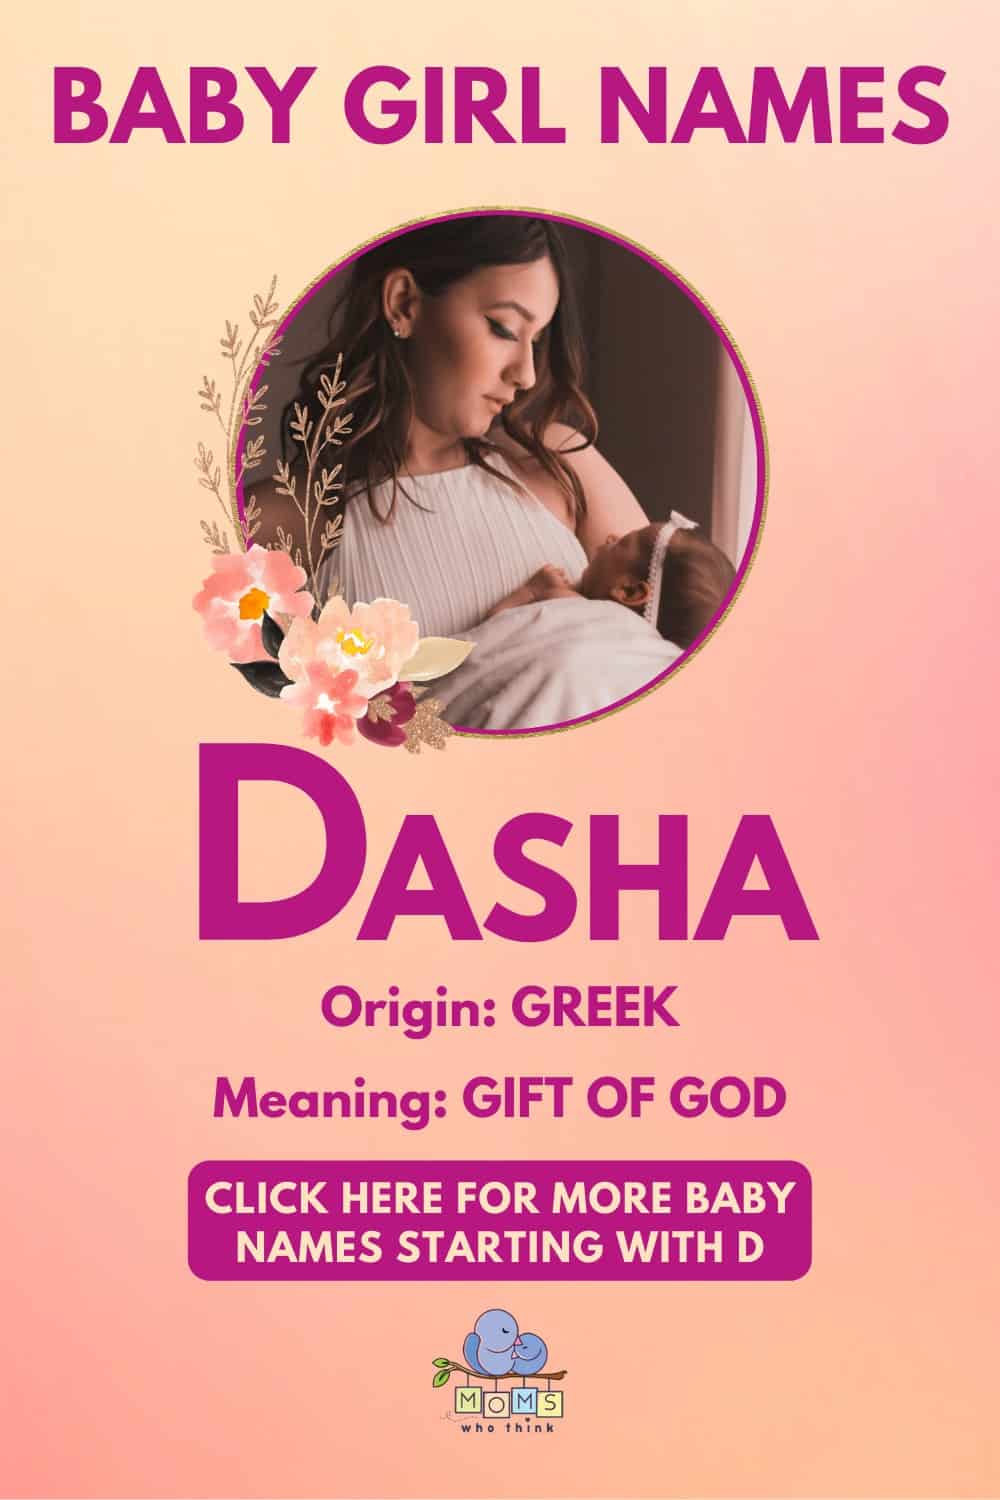 Baby girl name meanings - Dasha